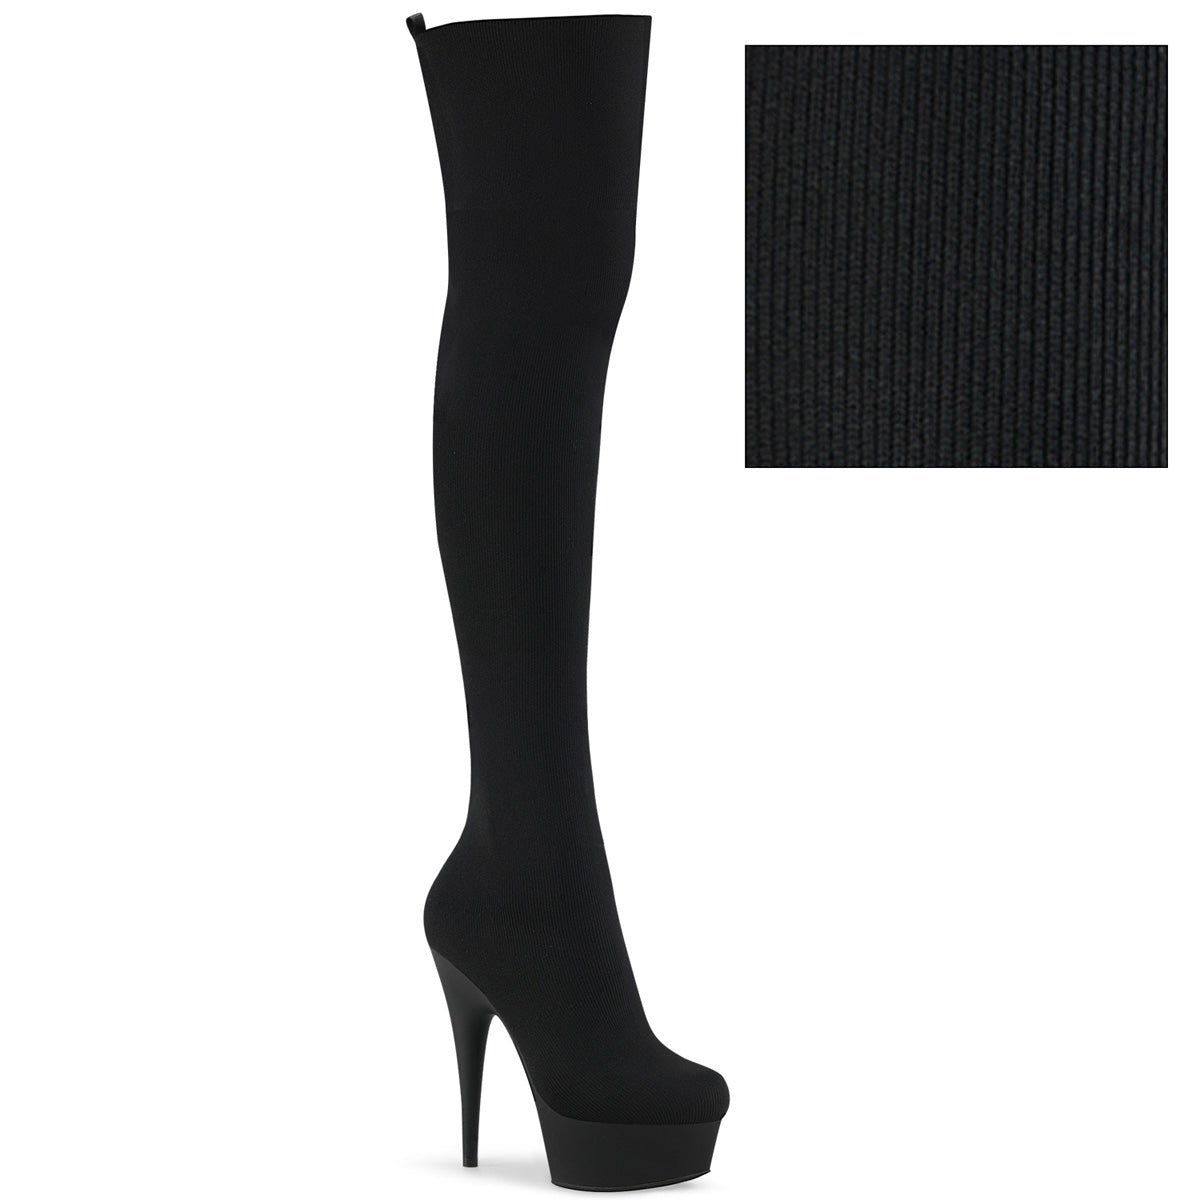 6" Heel DELIGHT-3002-1 Black Stretch Knit Fabric